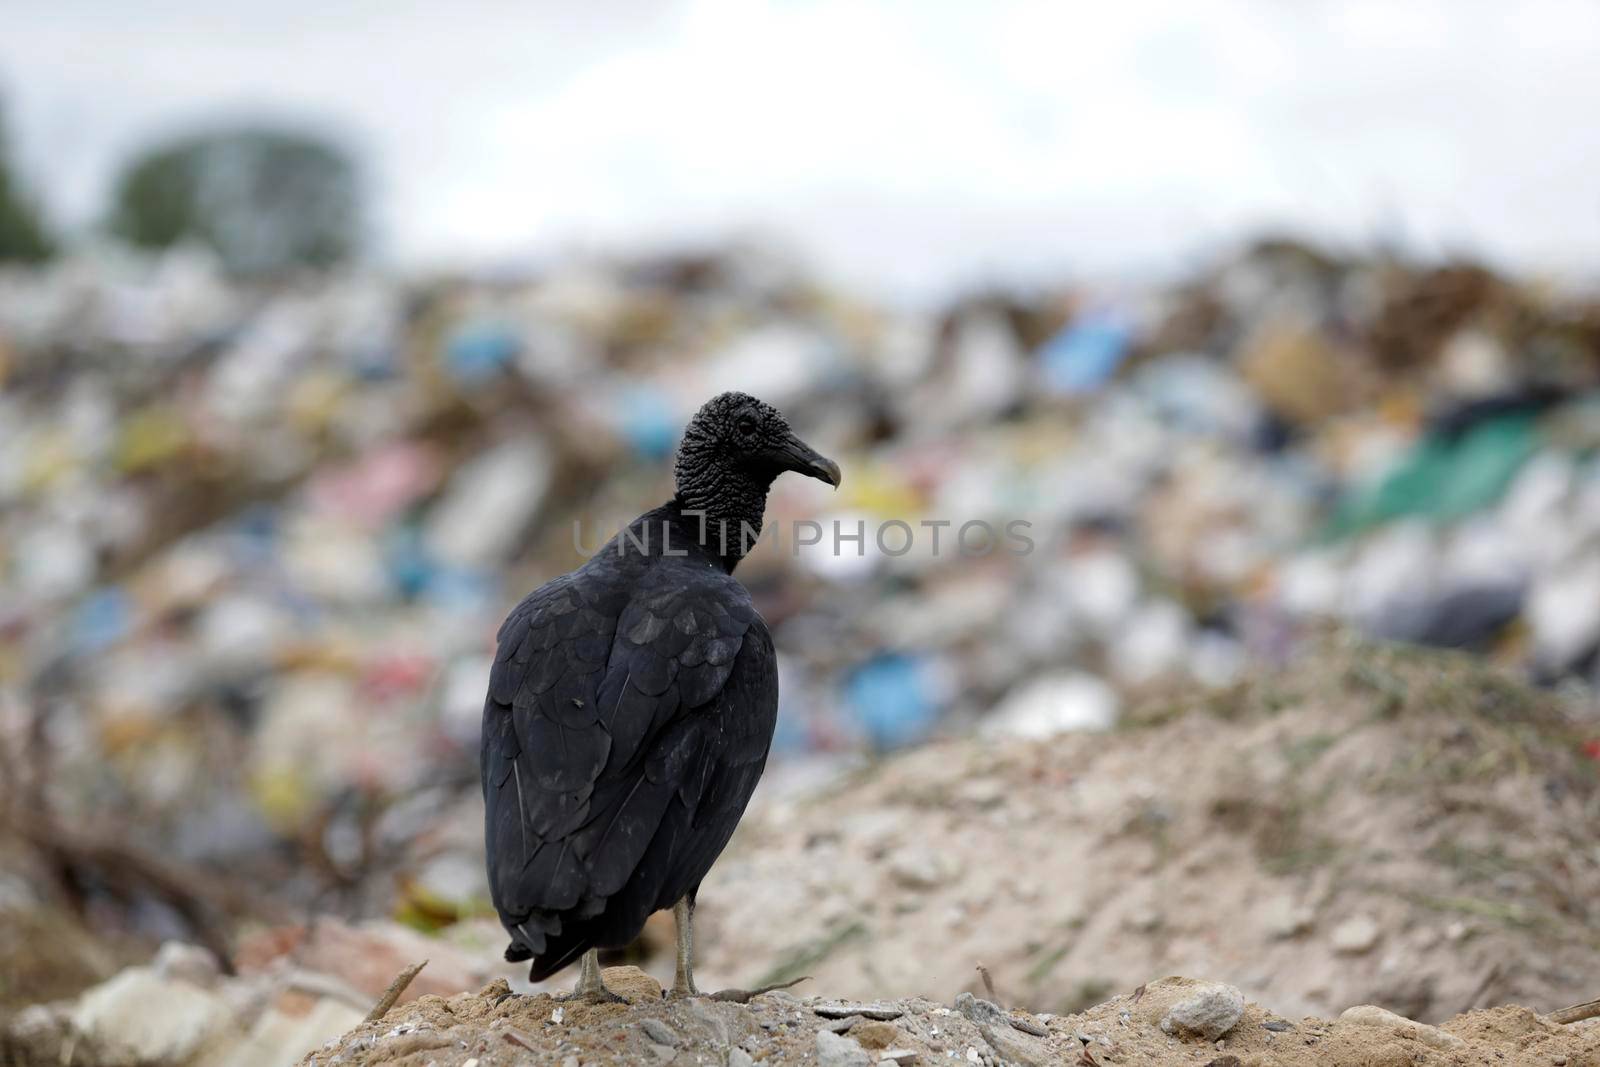 animals in landfill in catu by joasouza